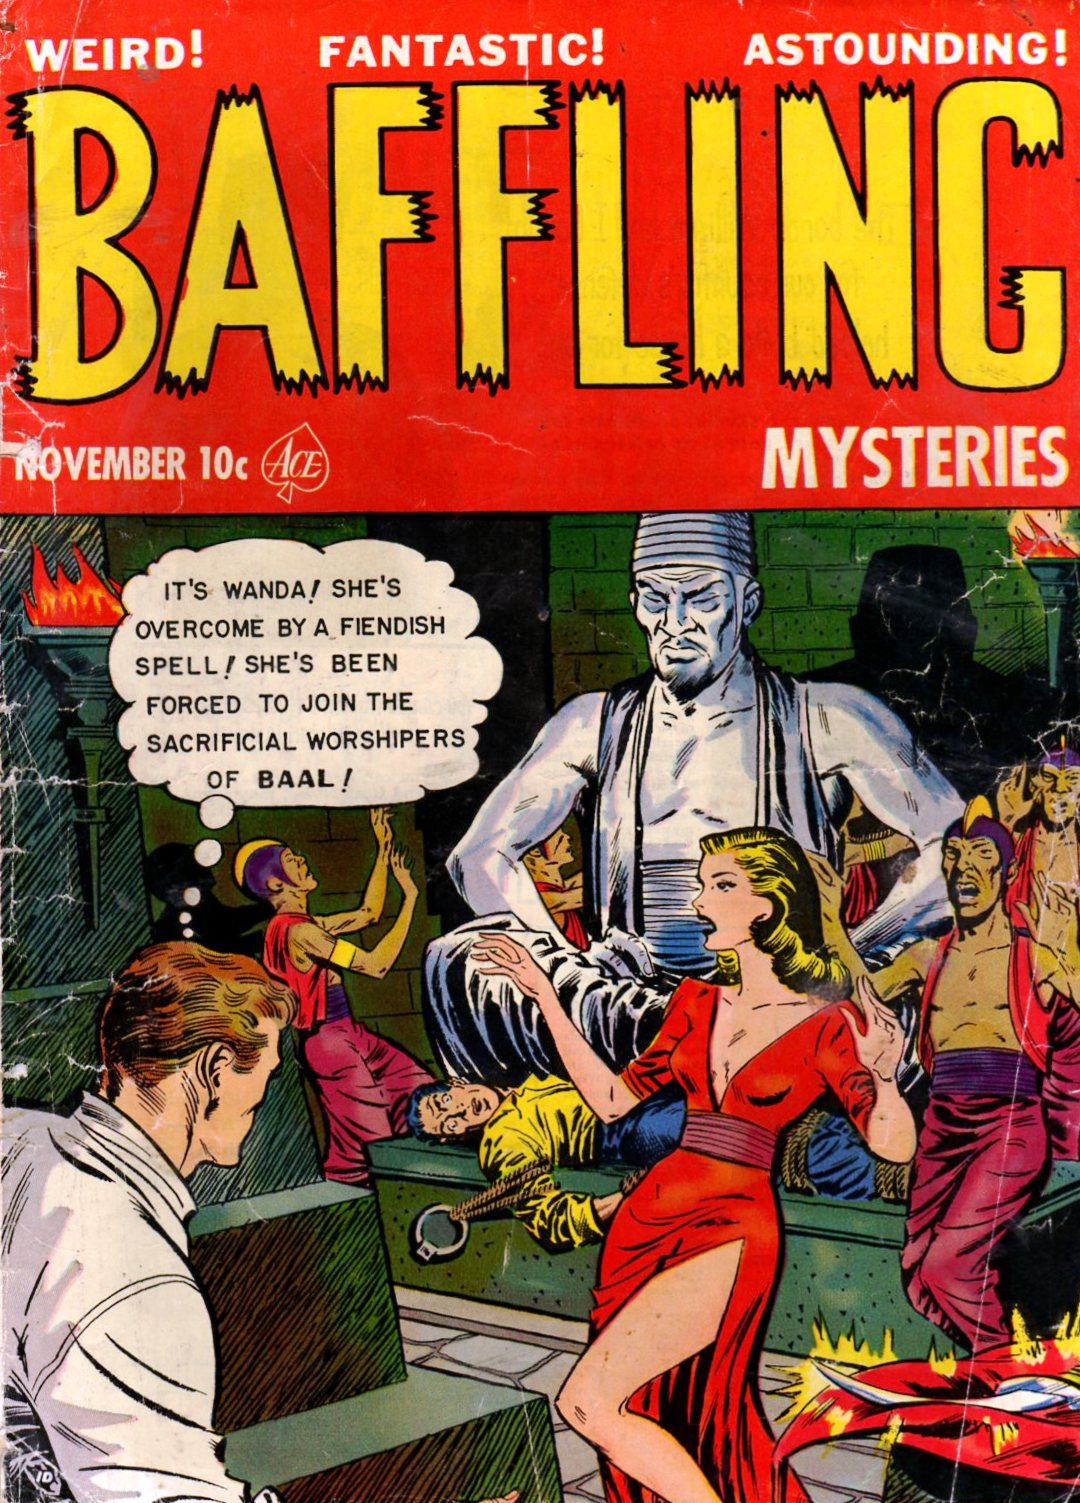 Baffling-Mysteries-11